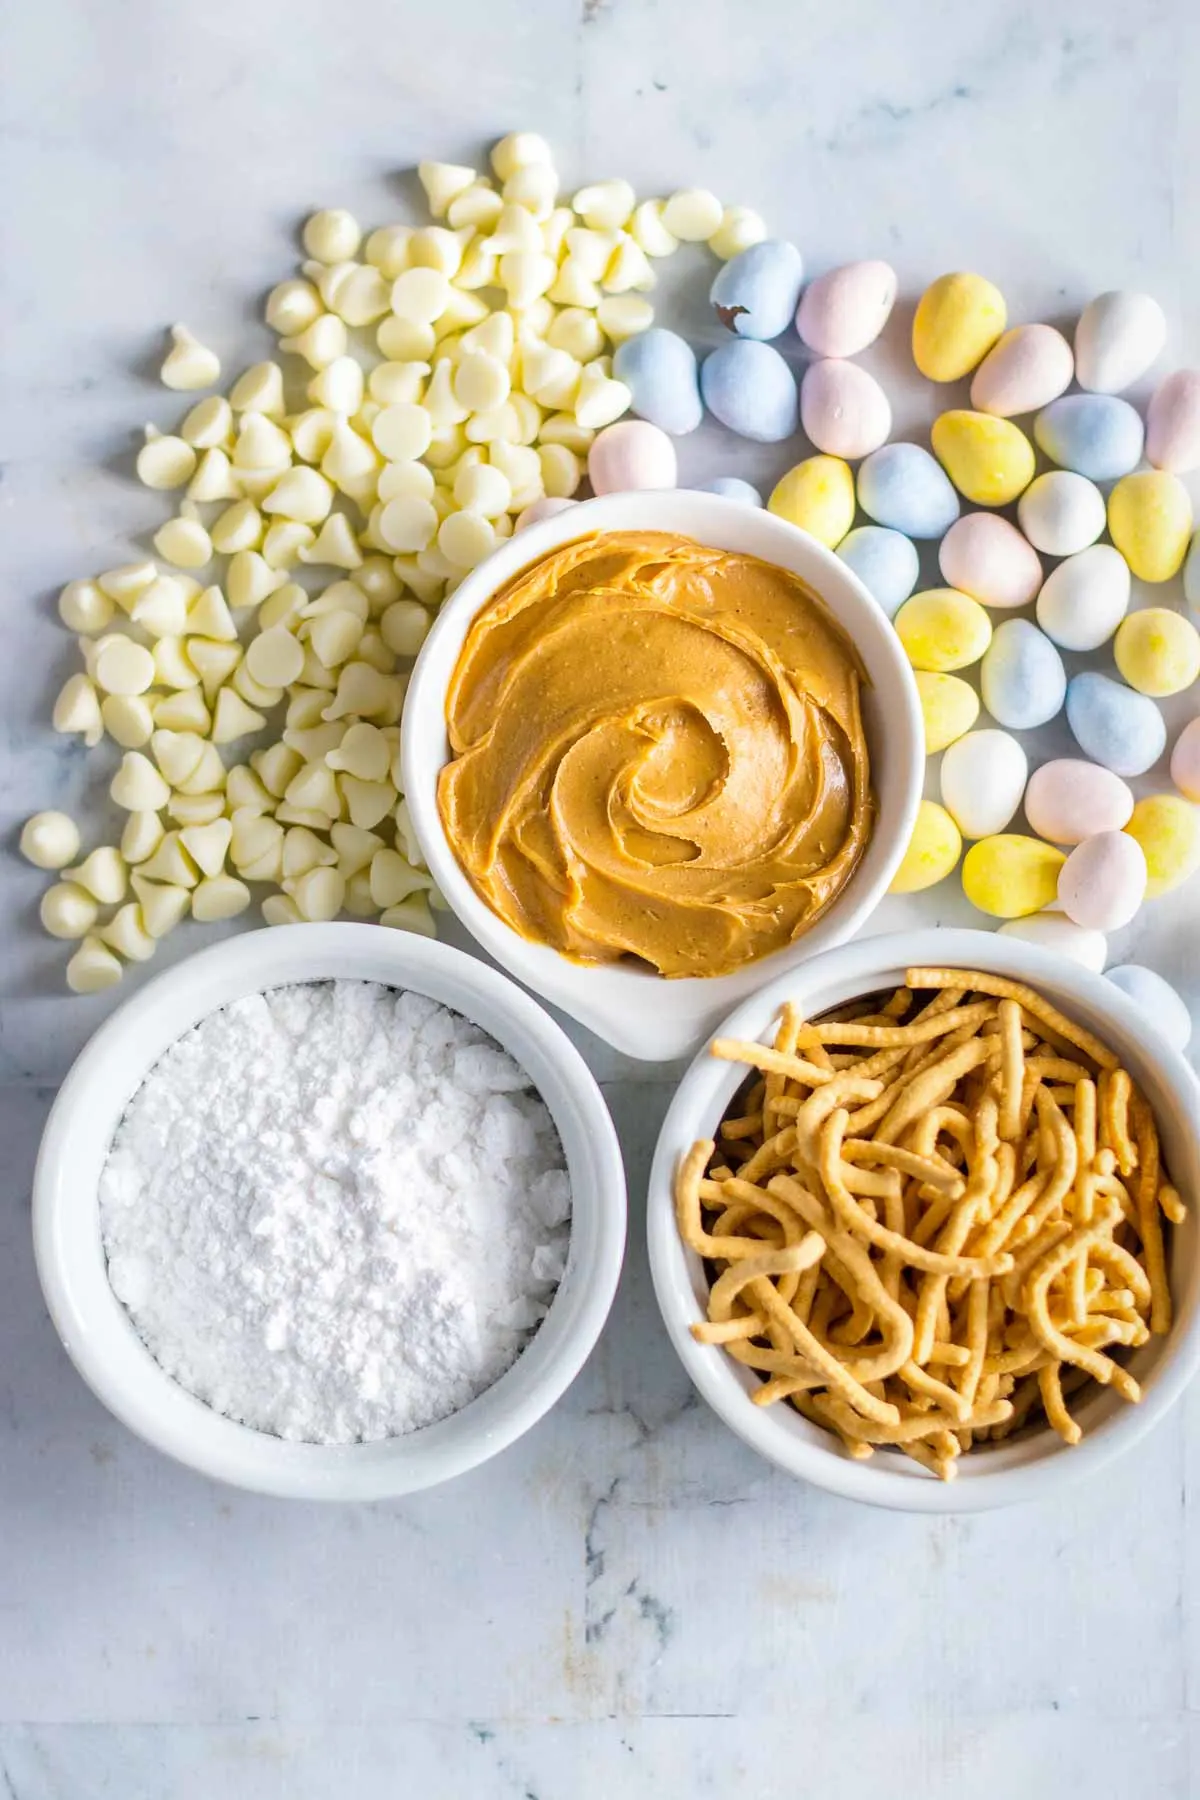 Ingredients to make Easter egg nests